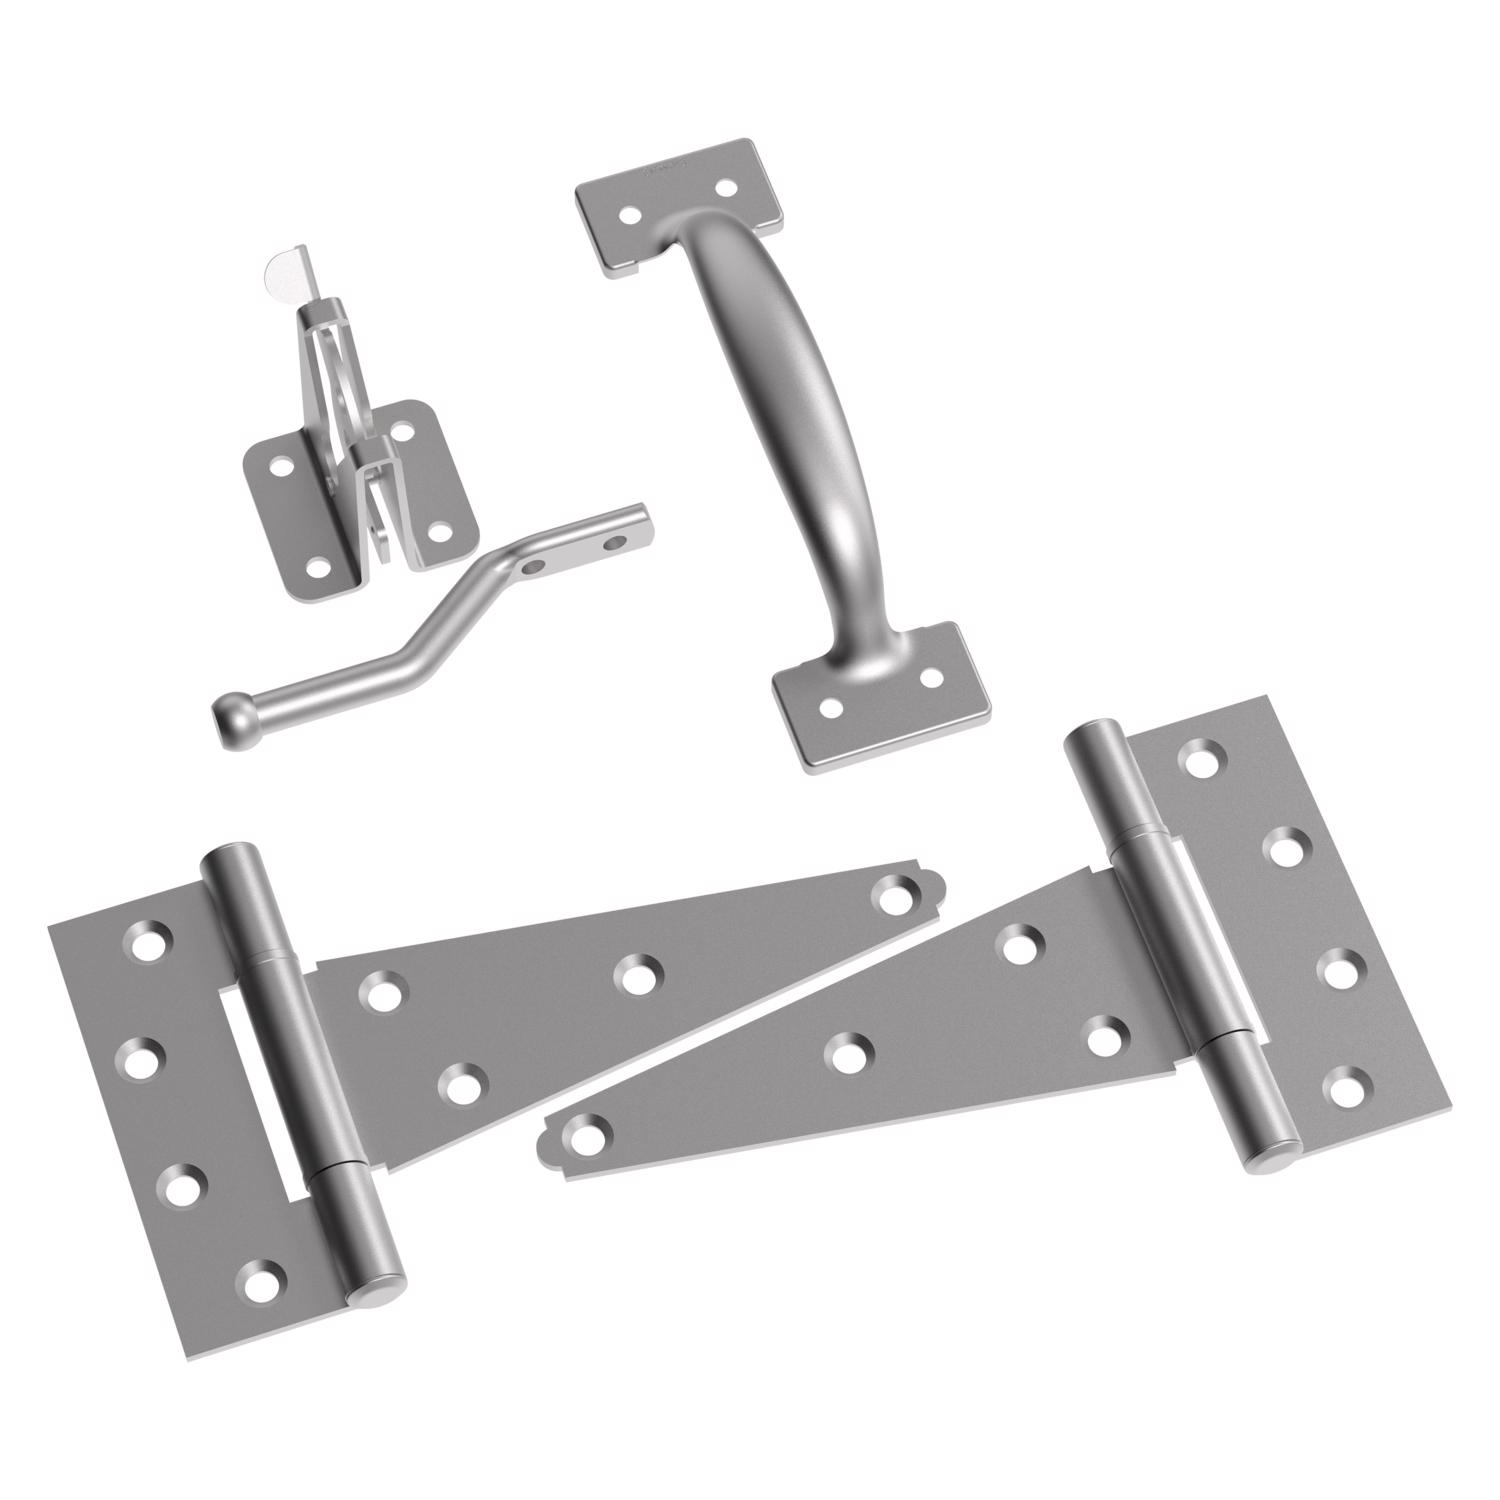 National Hardware Galvanized Silver Steel T-Hinge Gate Kit 1 pk